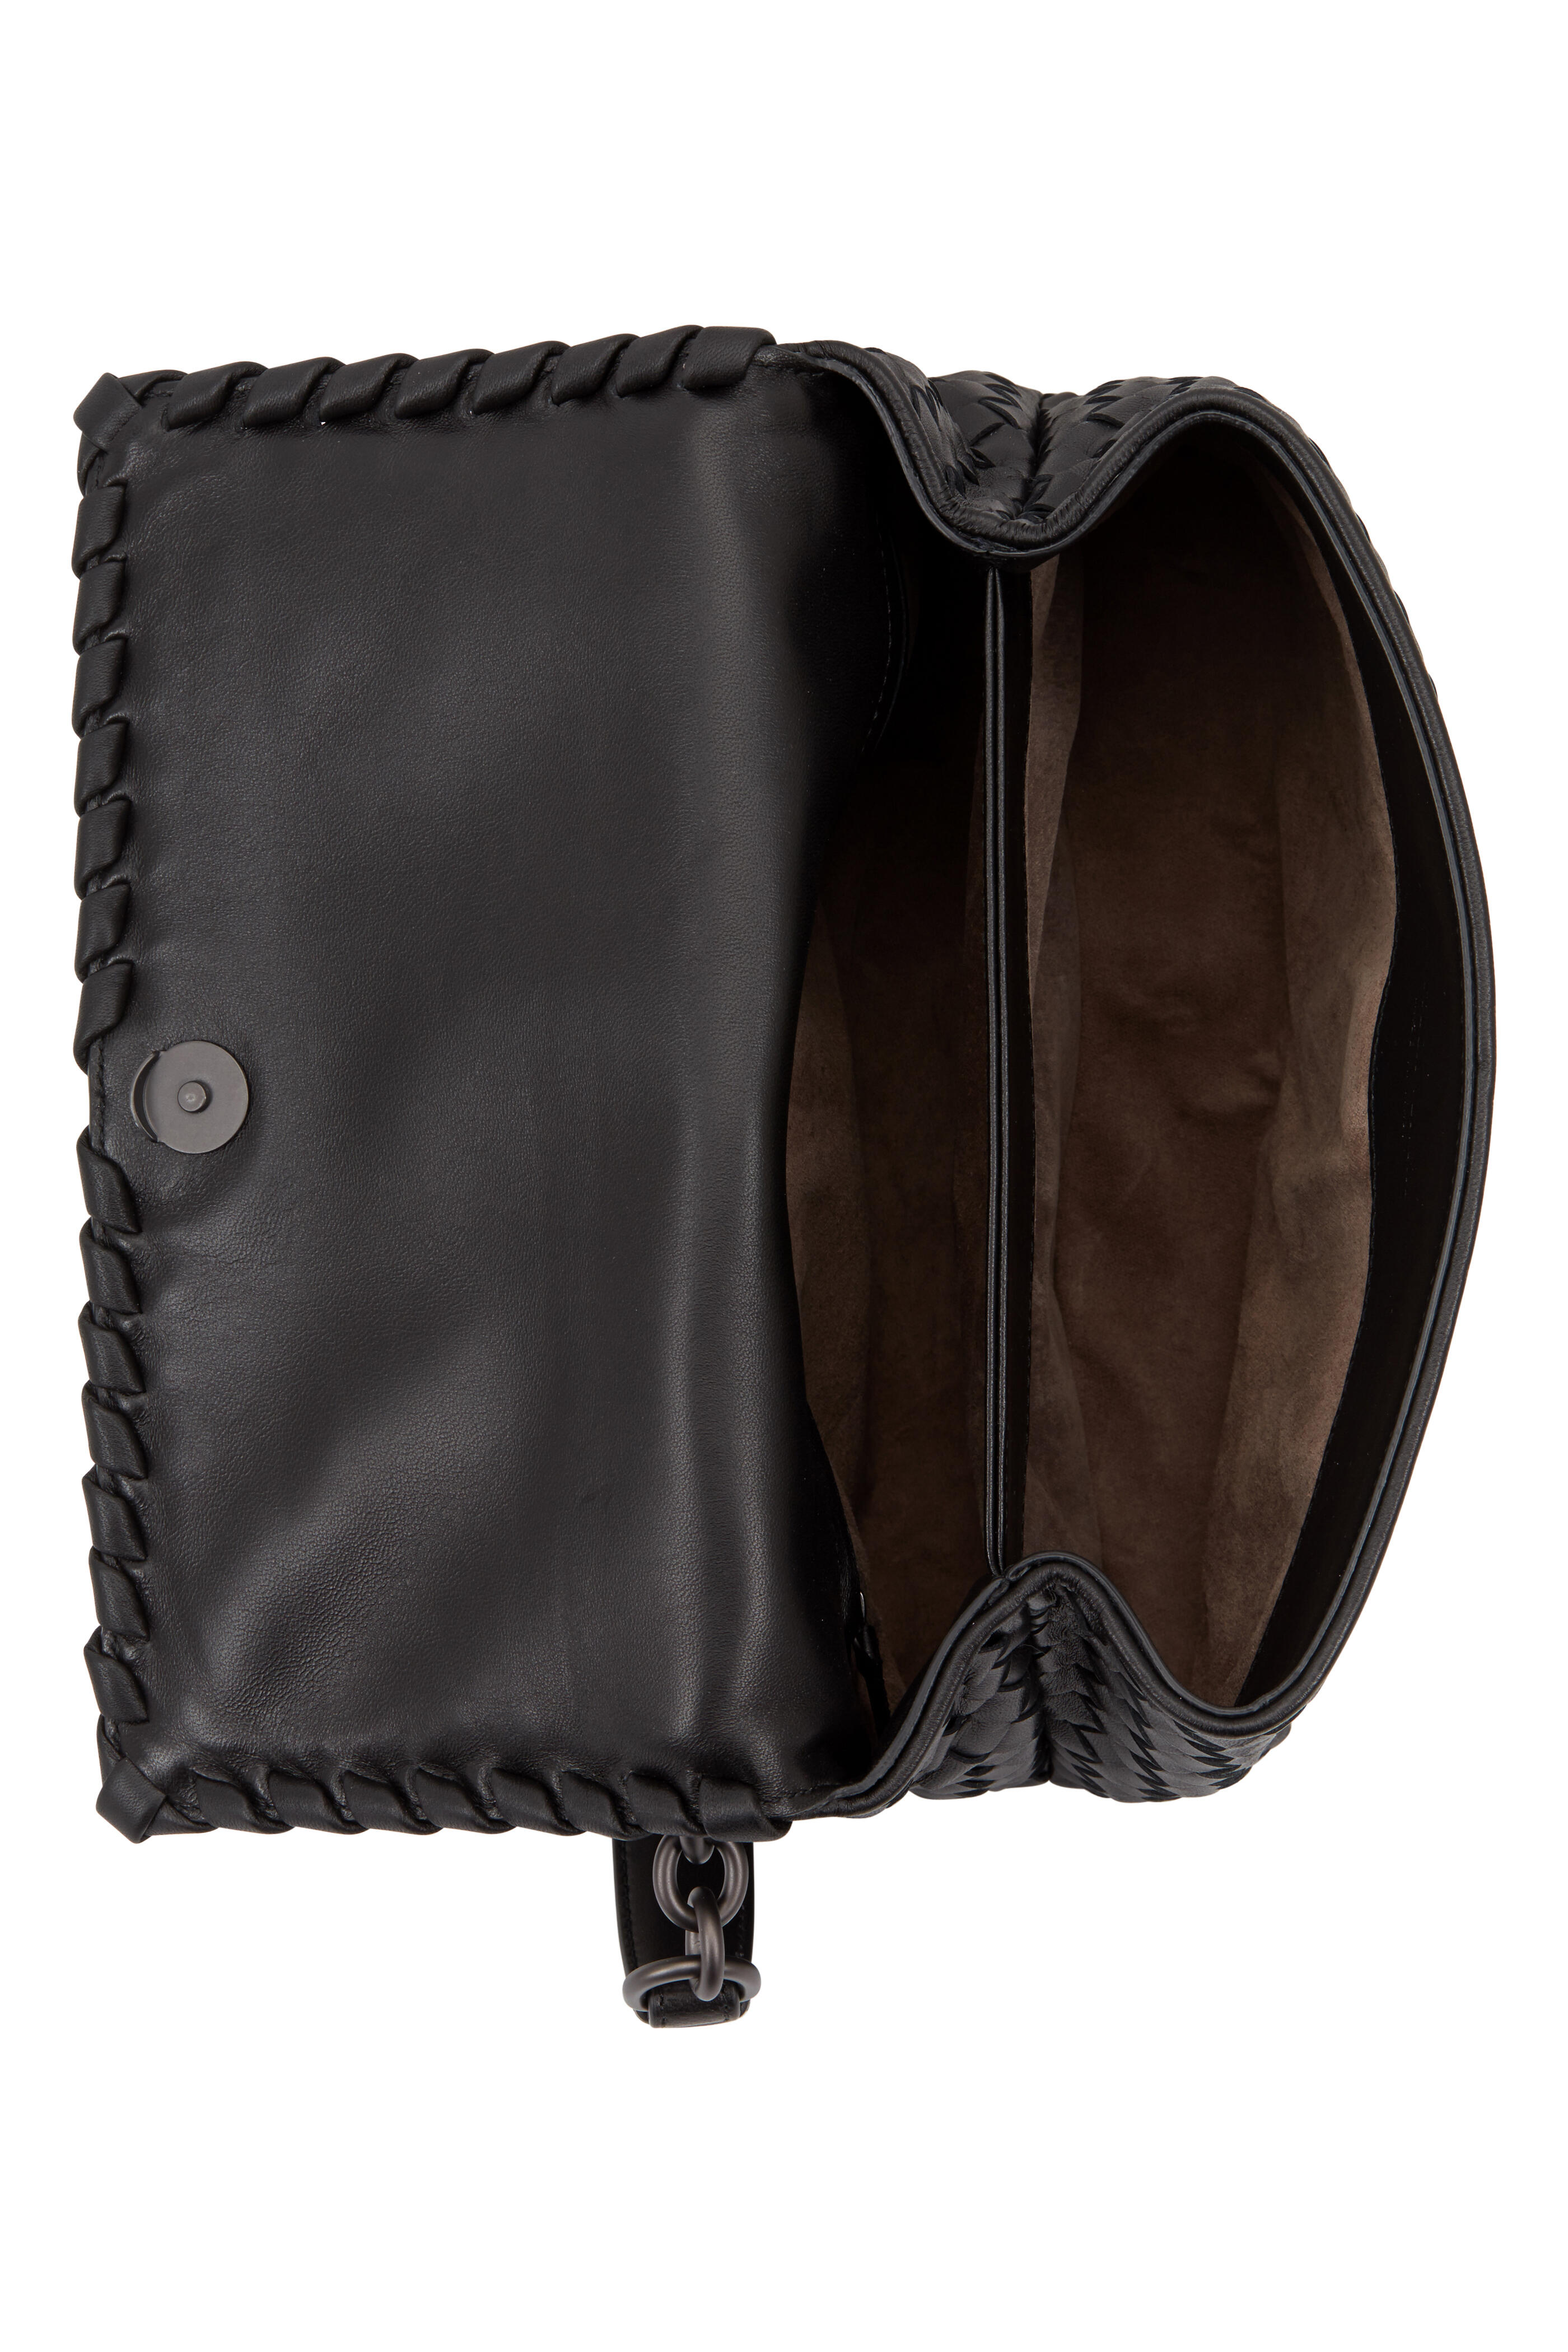 Bottega Veneta Olimpia Small Intrecciato Leather Shoulder Bag